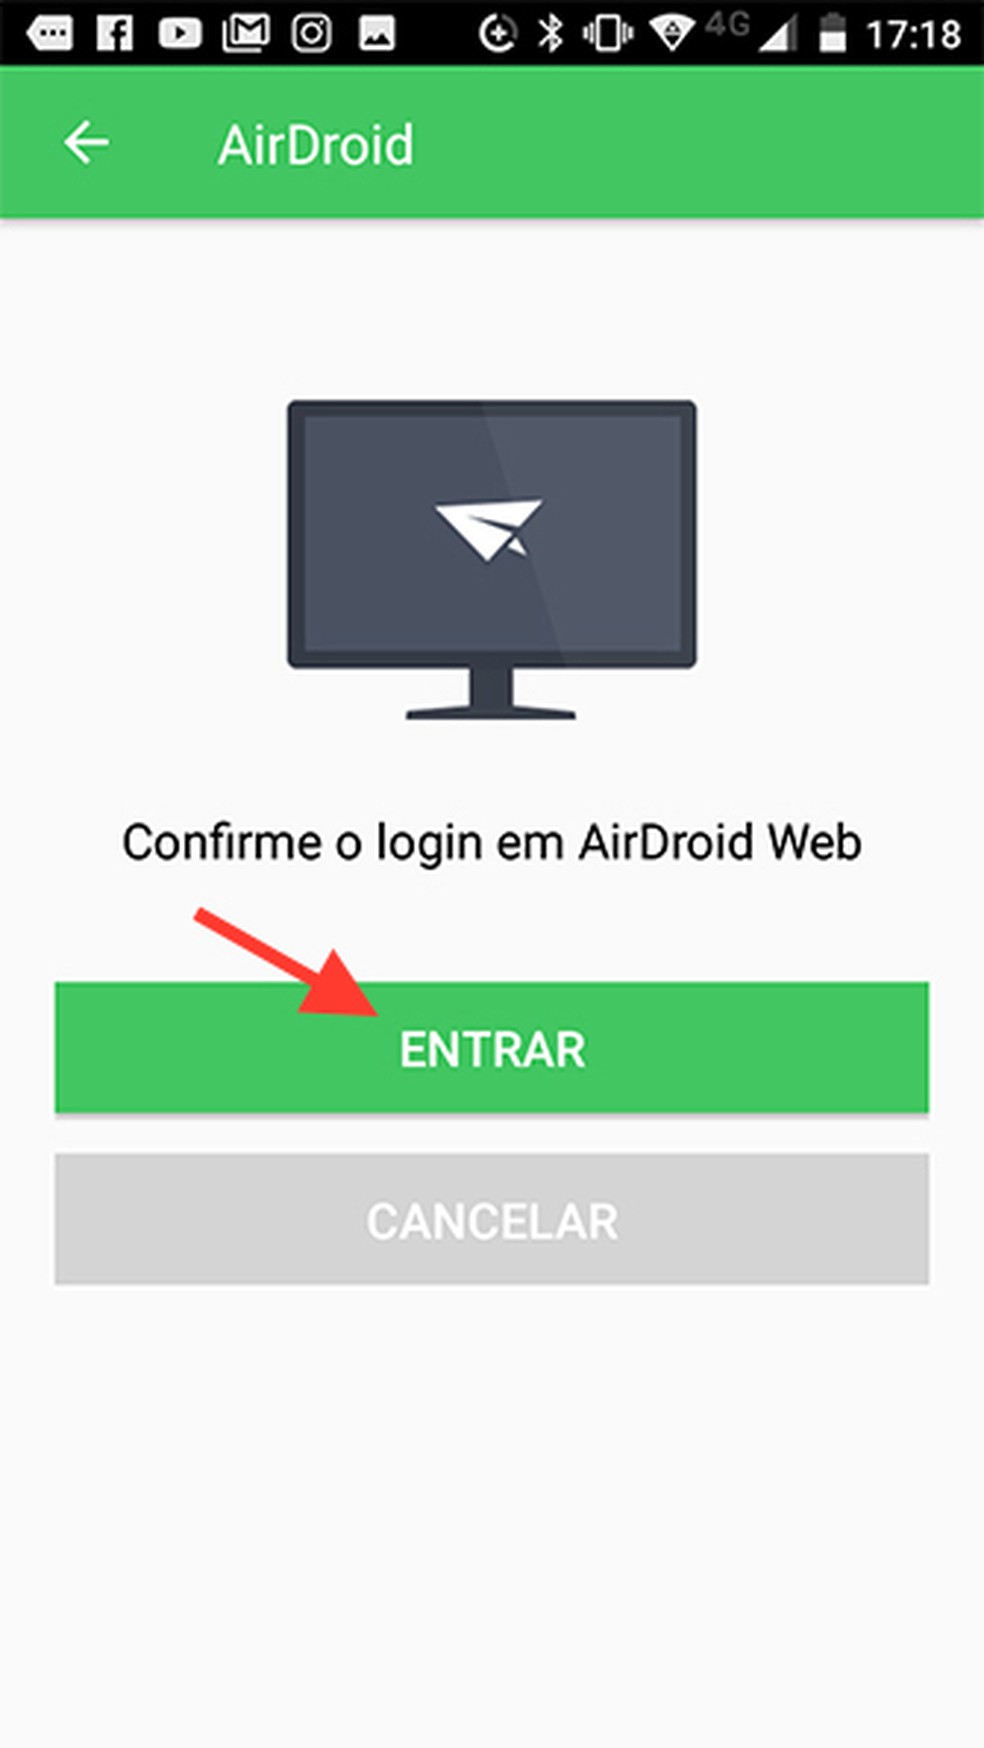 airdroid login web